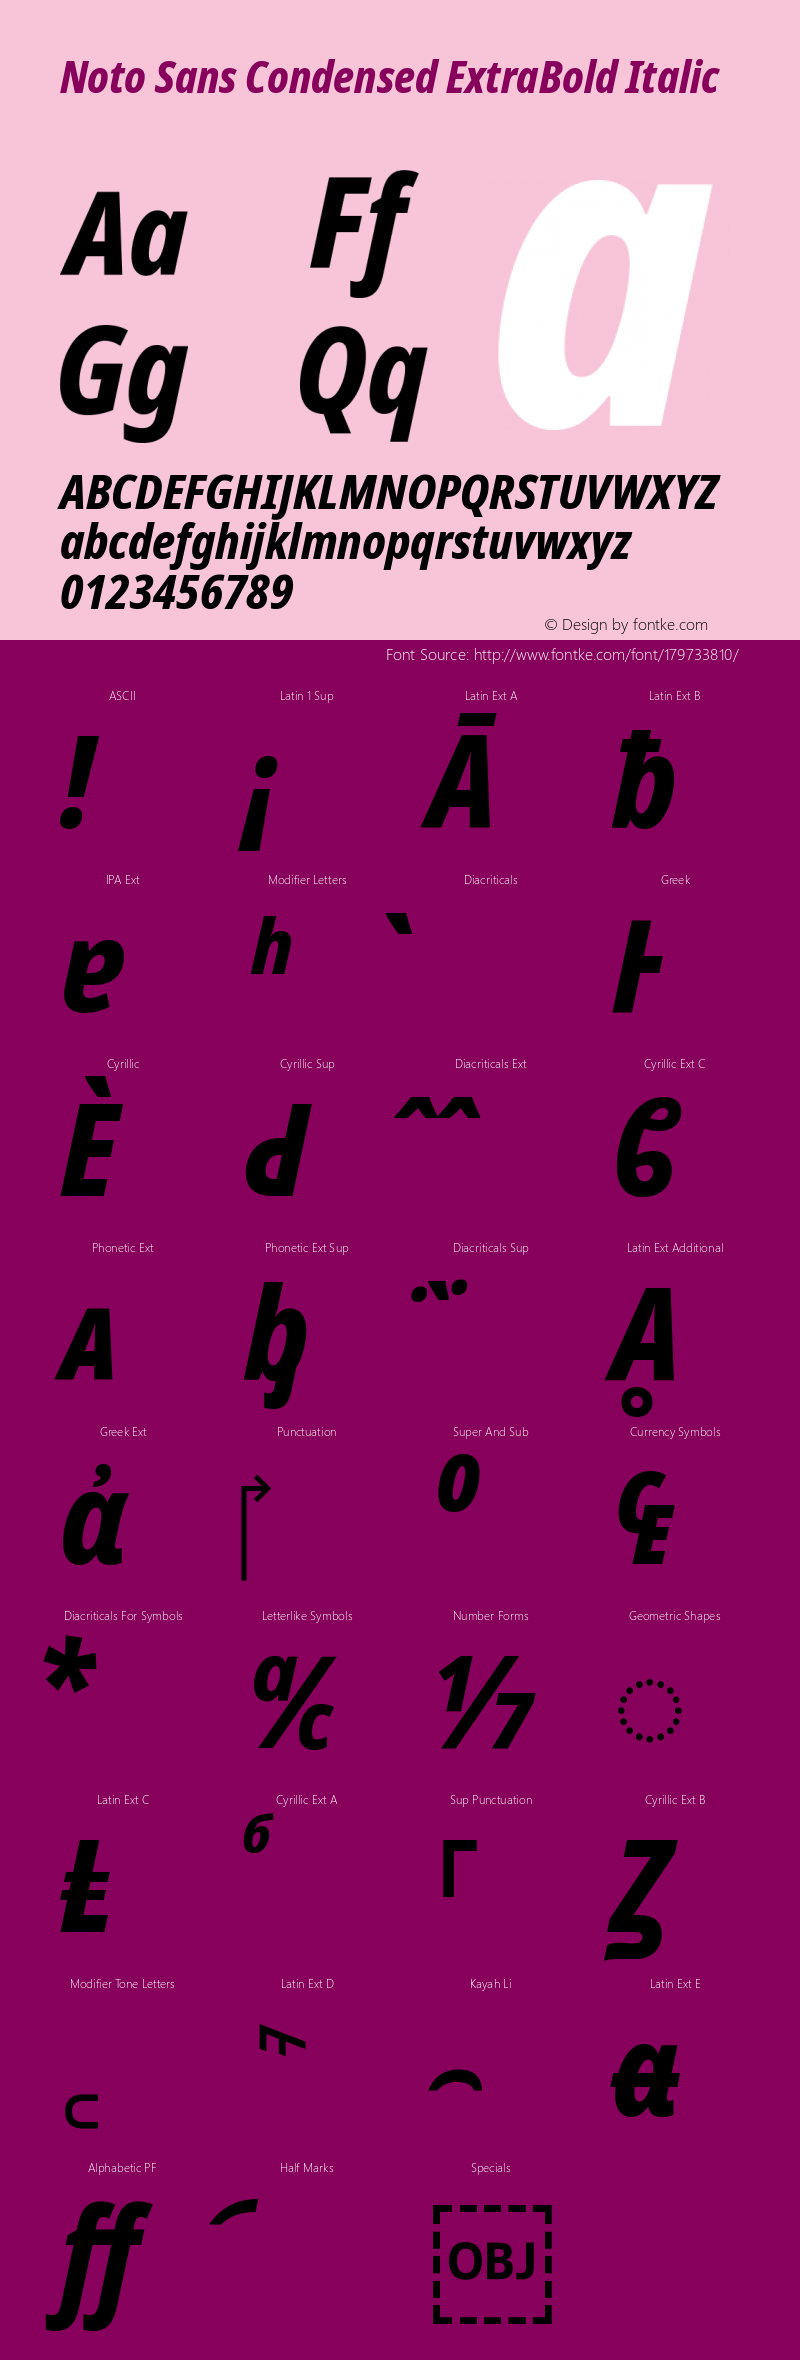 Noto Sans Condensed ExtraBold Italic Version 2.003图片样张